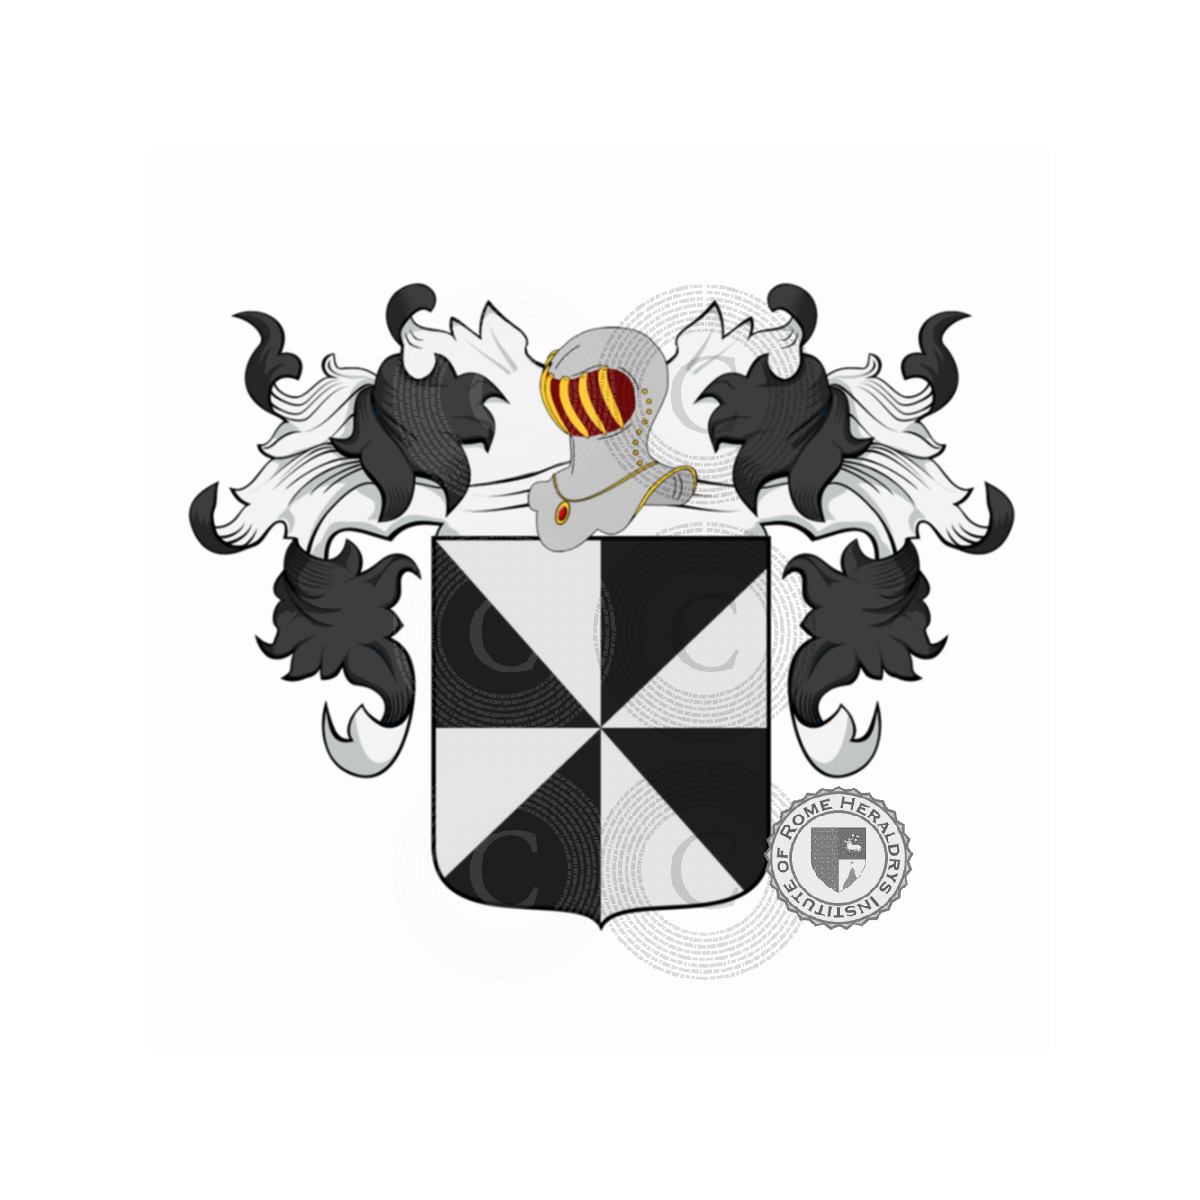 Wappen der FamiliePalmieri, Palmieri da Figline,Palmieri de Gangalandi,Palmieri del Drago,Palmieri del Rasoio,Palmieri della Camera,Palmieri Nuti